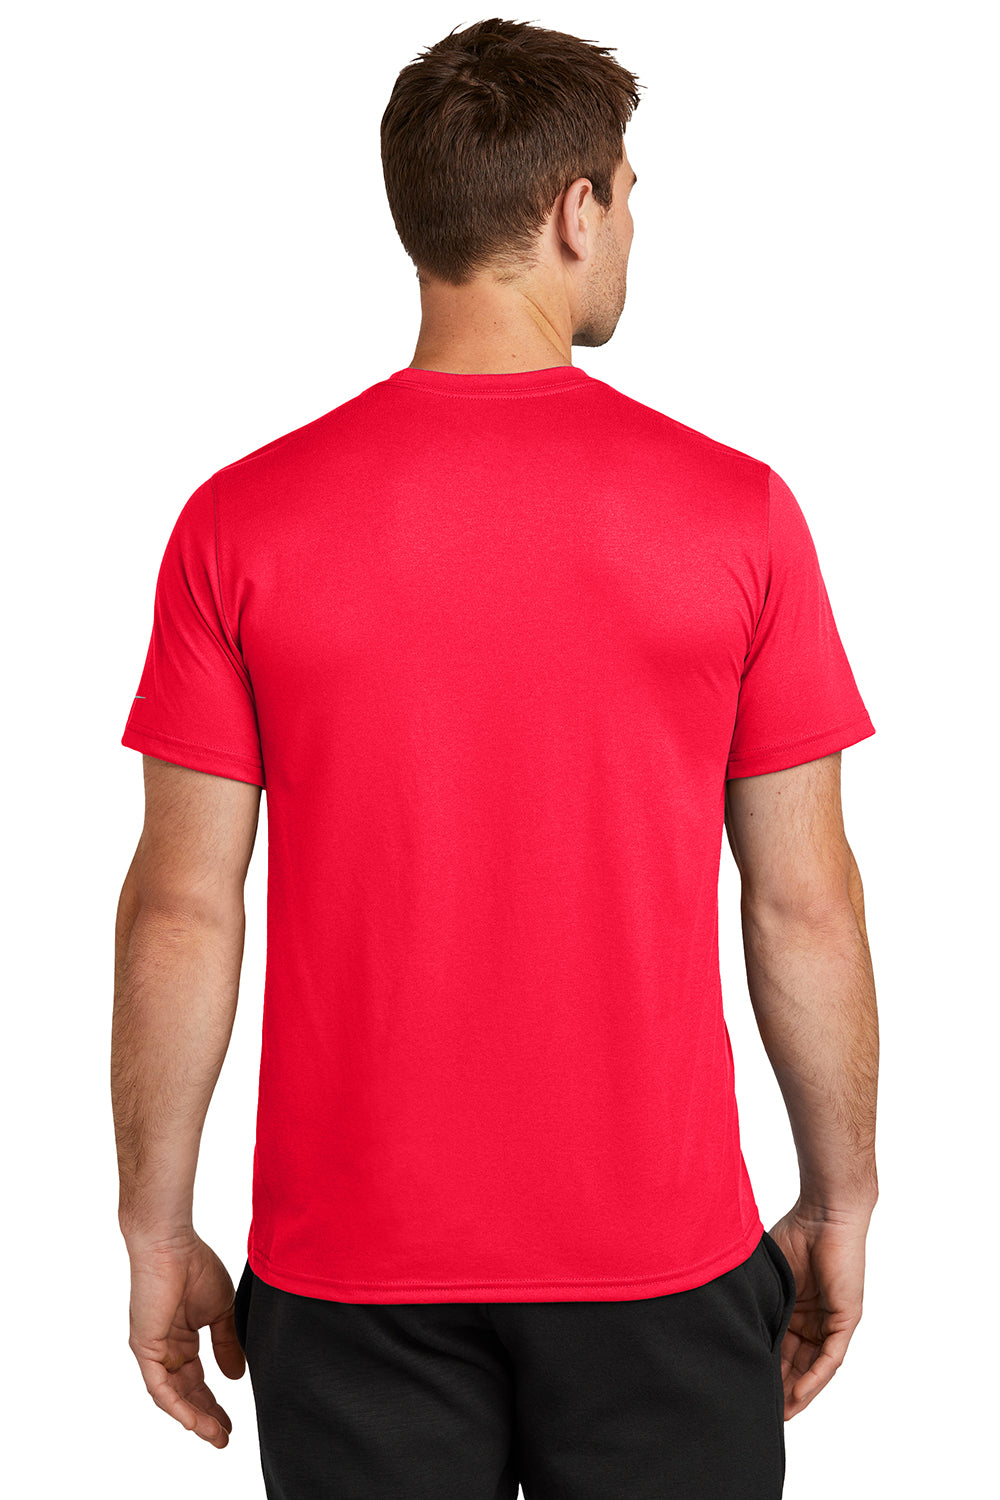 Nike NKDX8730 Mens rLegend Dri-Fit Moisture Wicking Short Sleeve Crewneck T-Shirt University Red Model Back